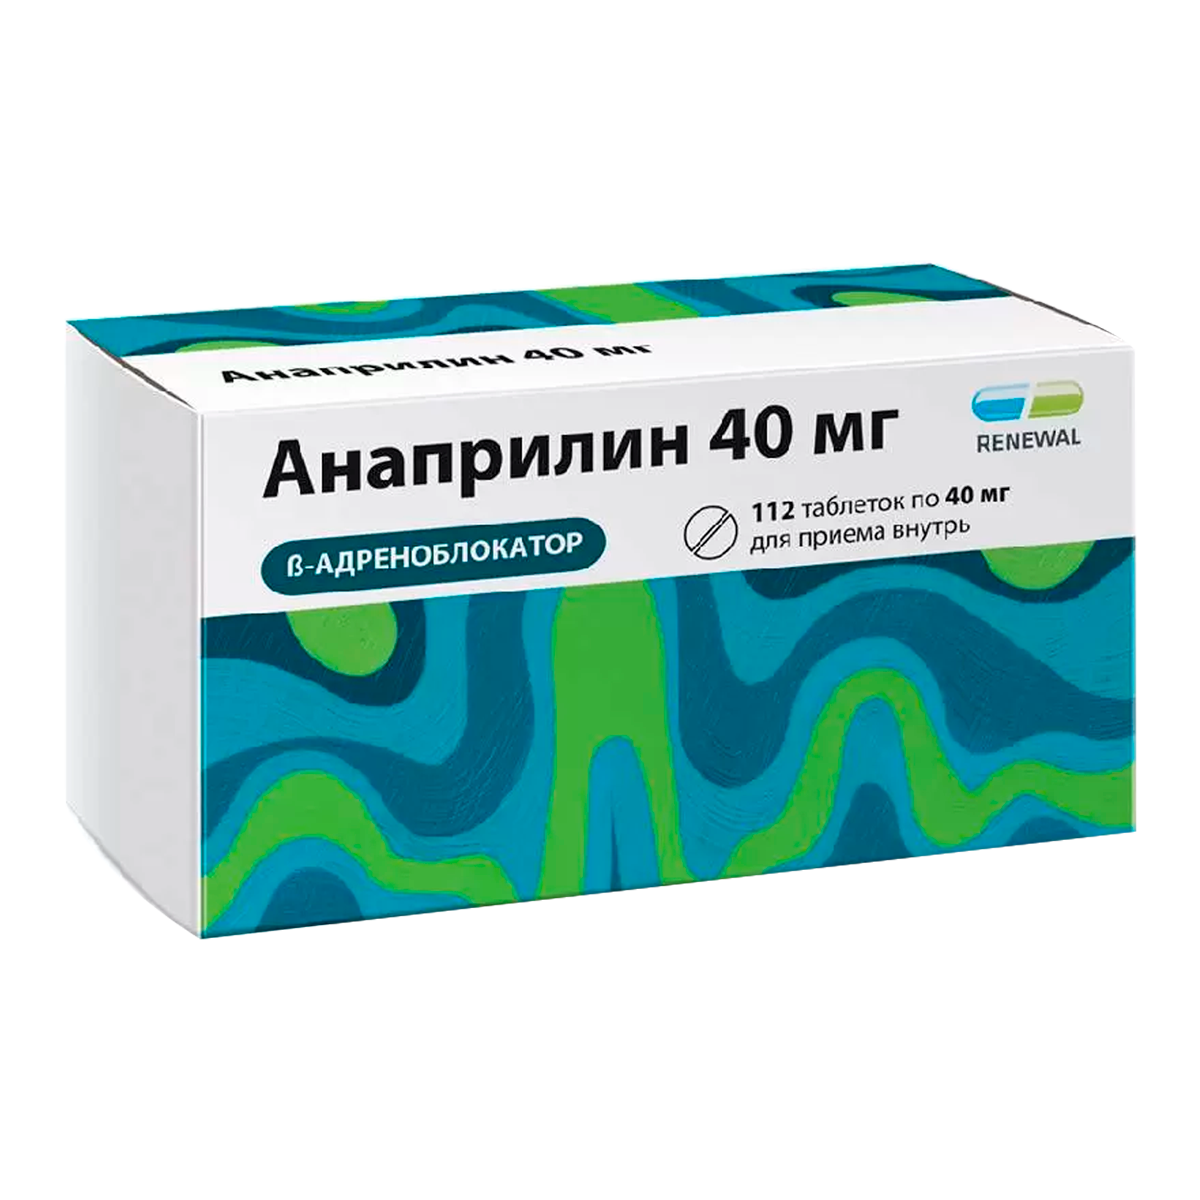 Анаприлин реневал 10 мг. Таблетки анаприлин реневал. Анаприлин 40 реневал. Анаприлин таблетки 10 мг.